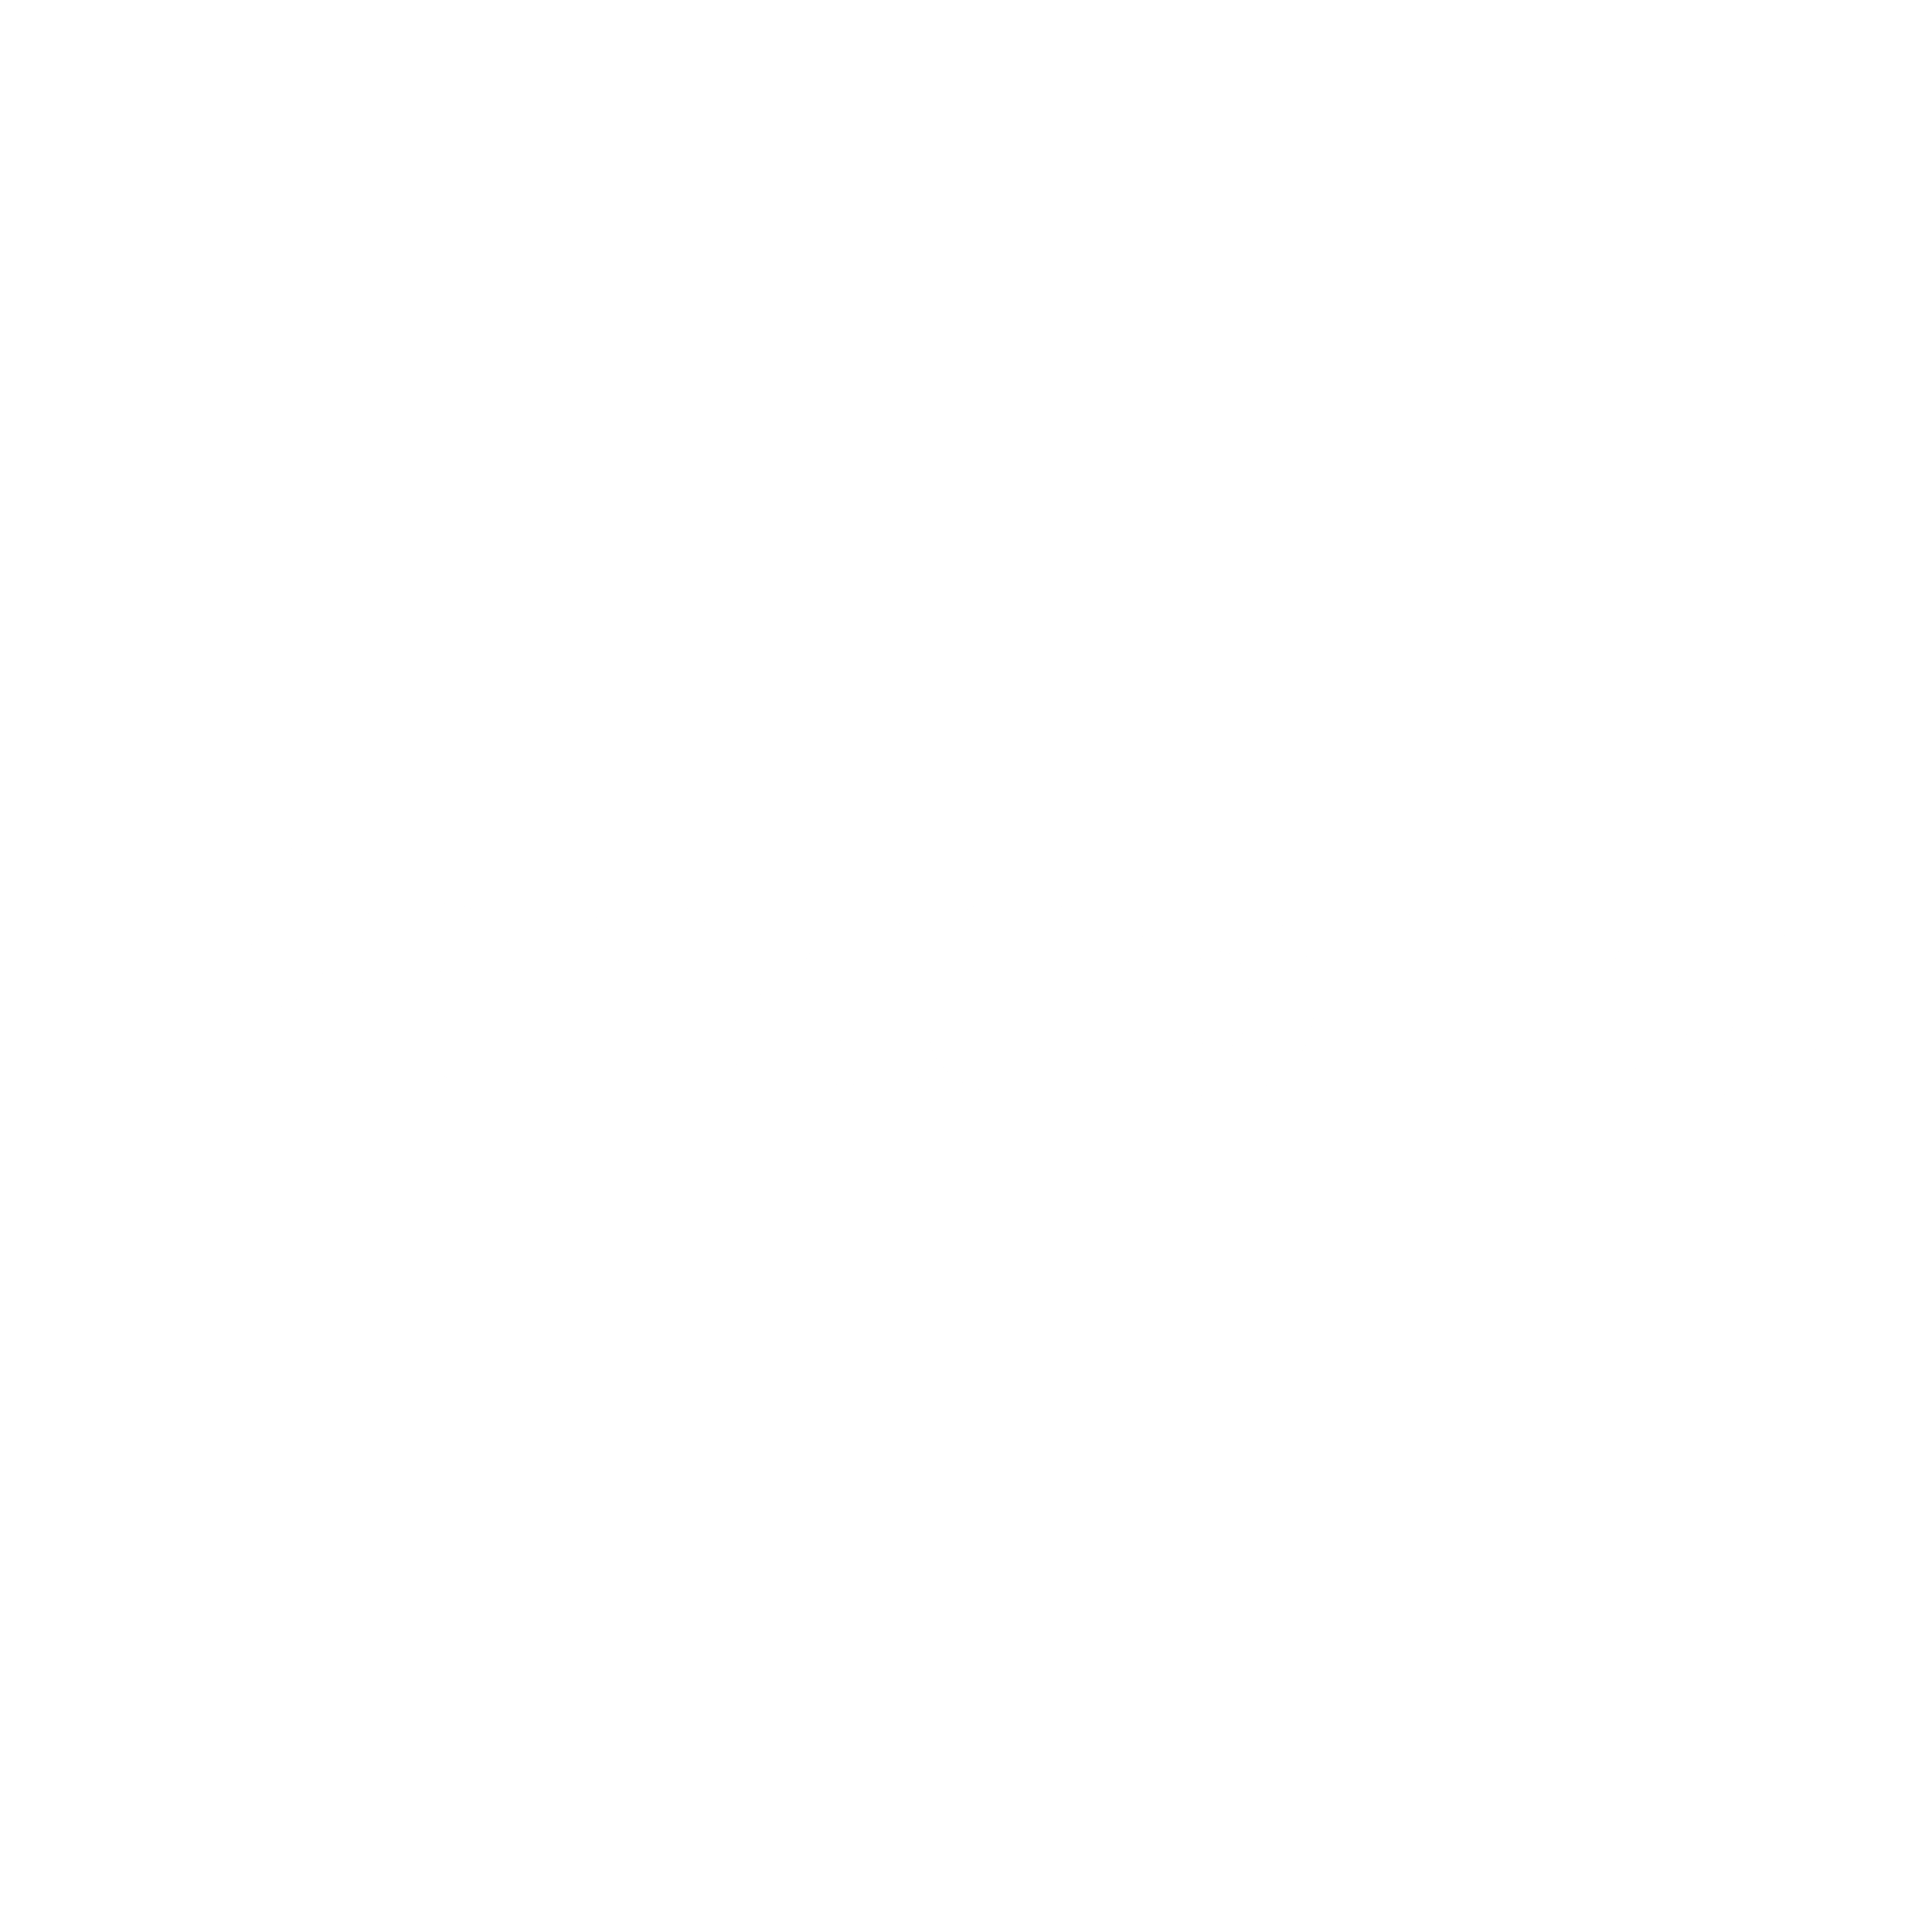 Panasonic Logo - panasonic-logo-black-and-white - Semper Solaris